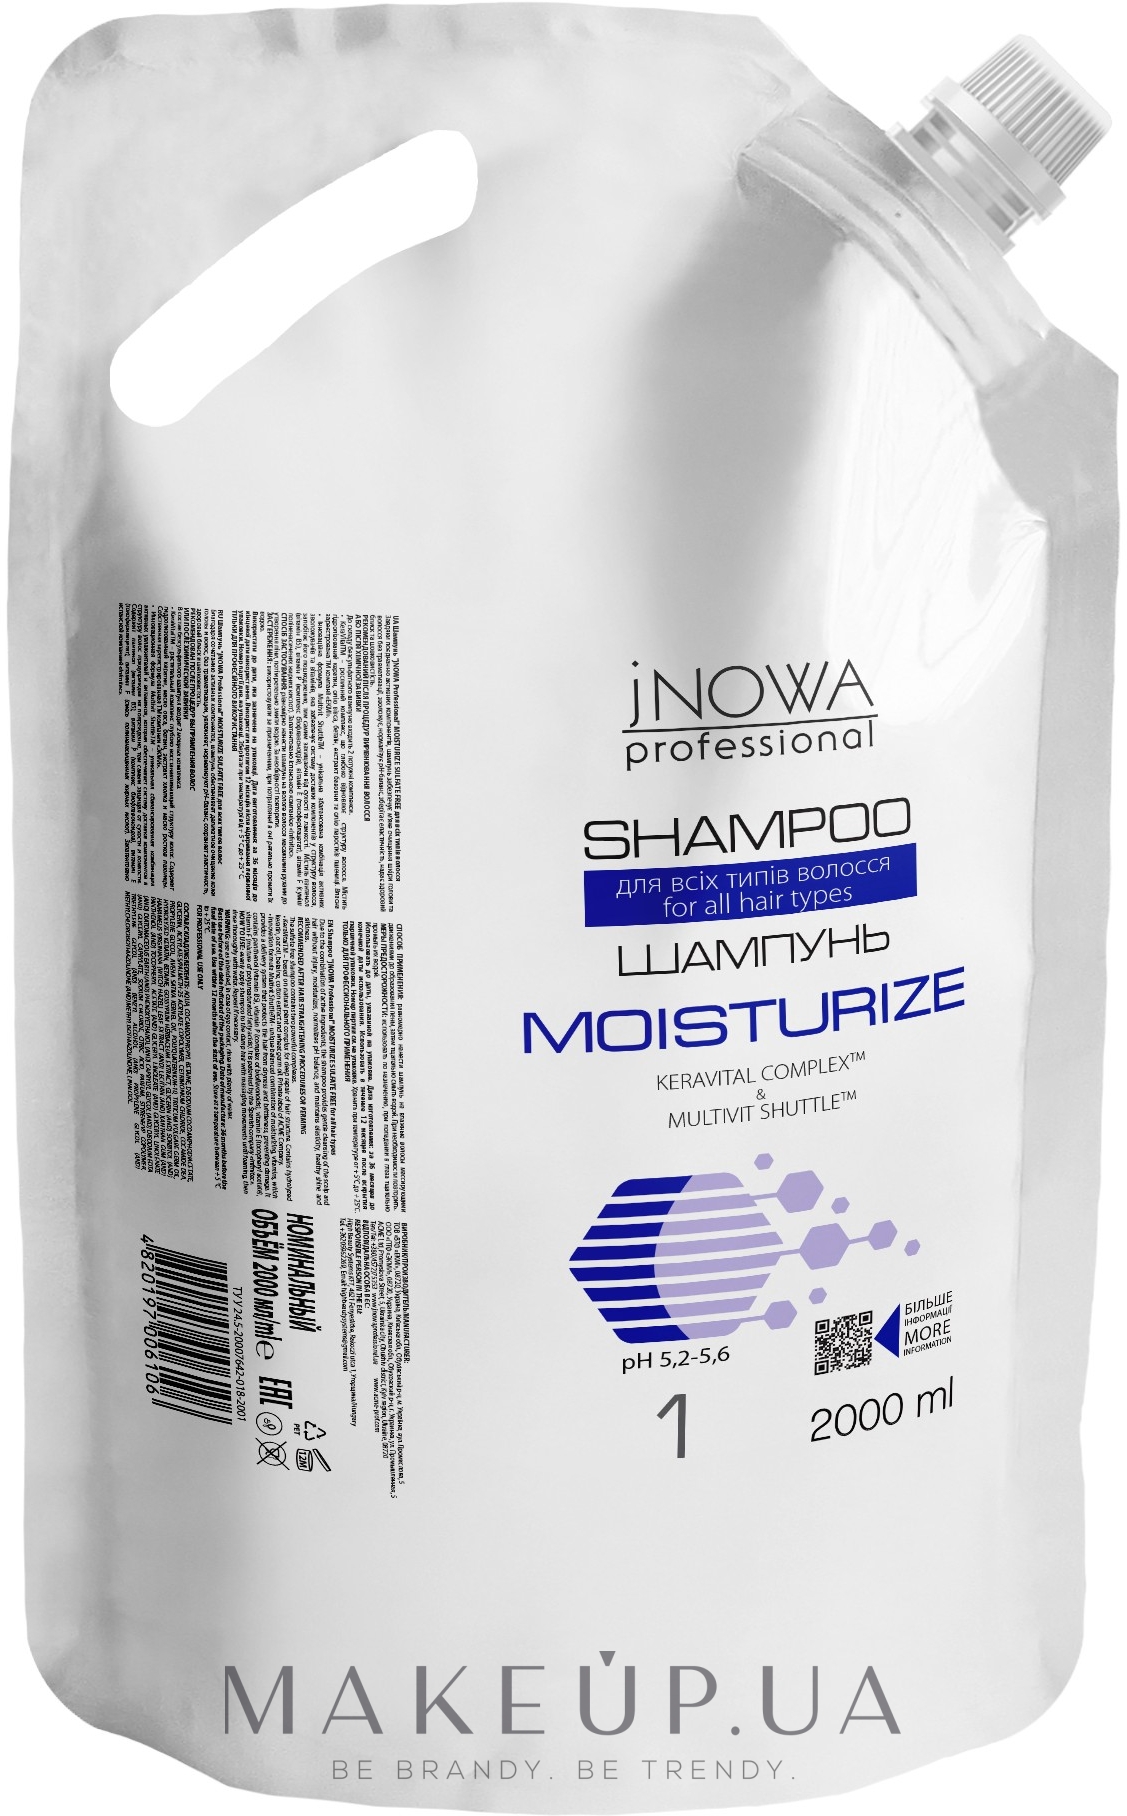 Шампунь для увлажнения волос - JNOWA Professional 1 Moisturize Sulfate Free Shampoo (дой-пак) — фото 2000ml